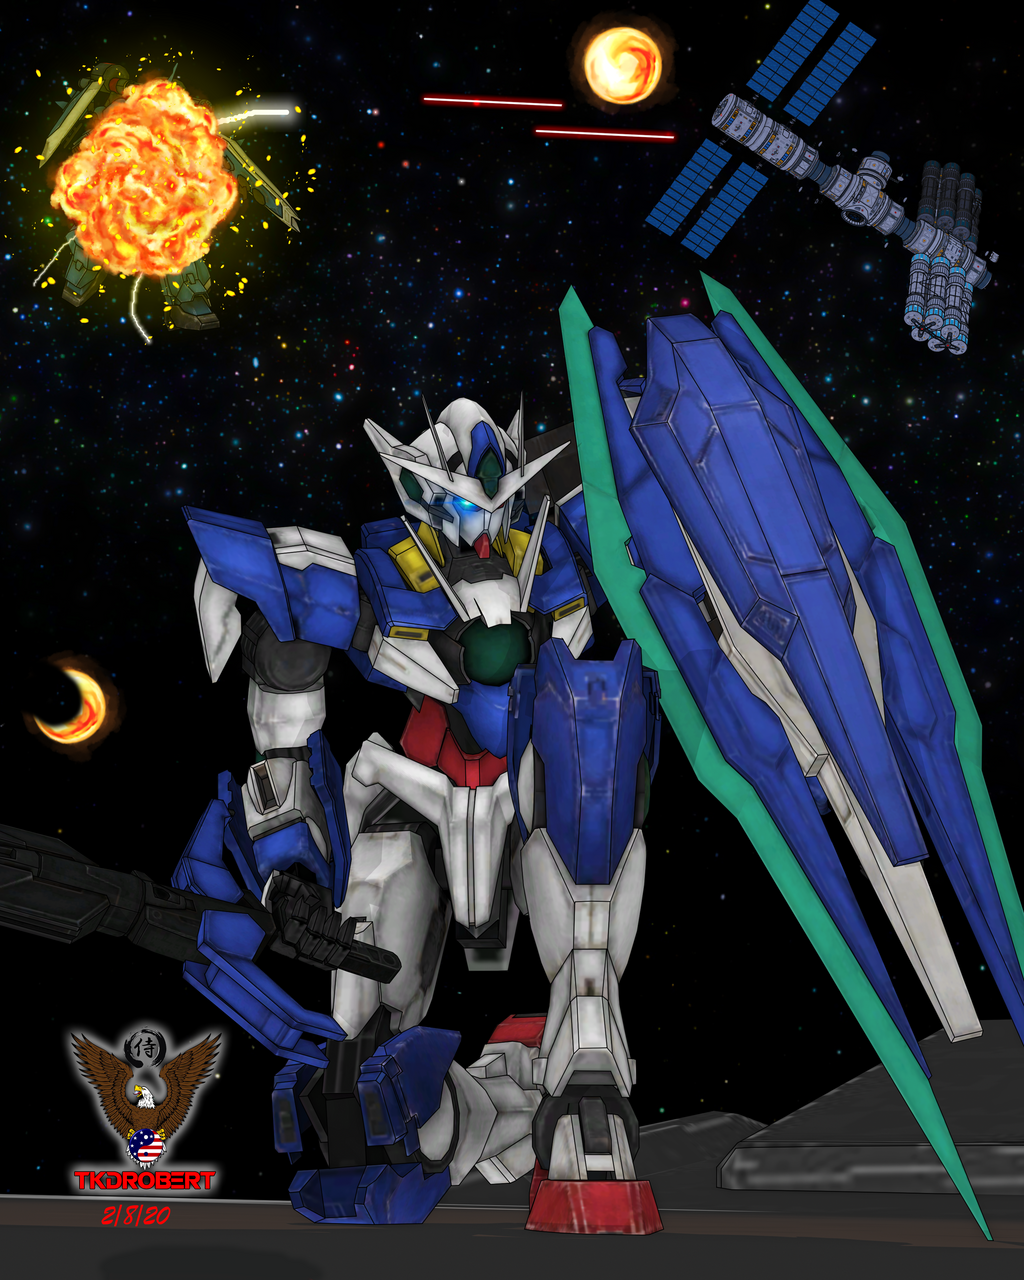 Gundam00 (Toon) by tkdrobert